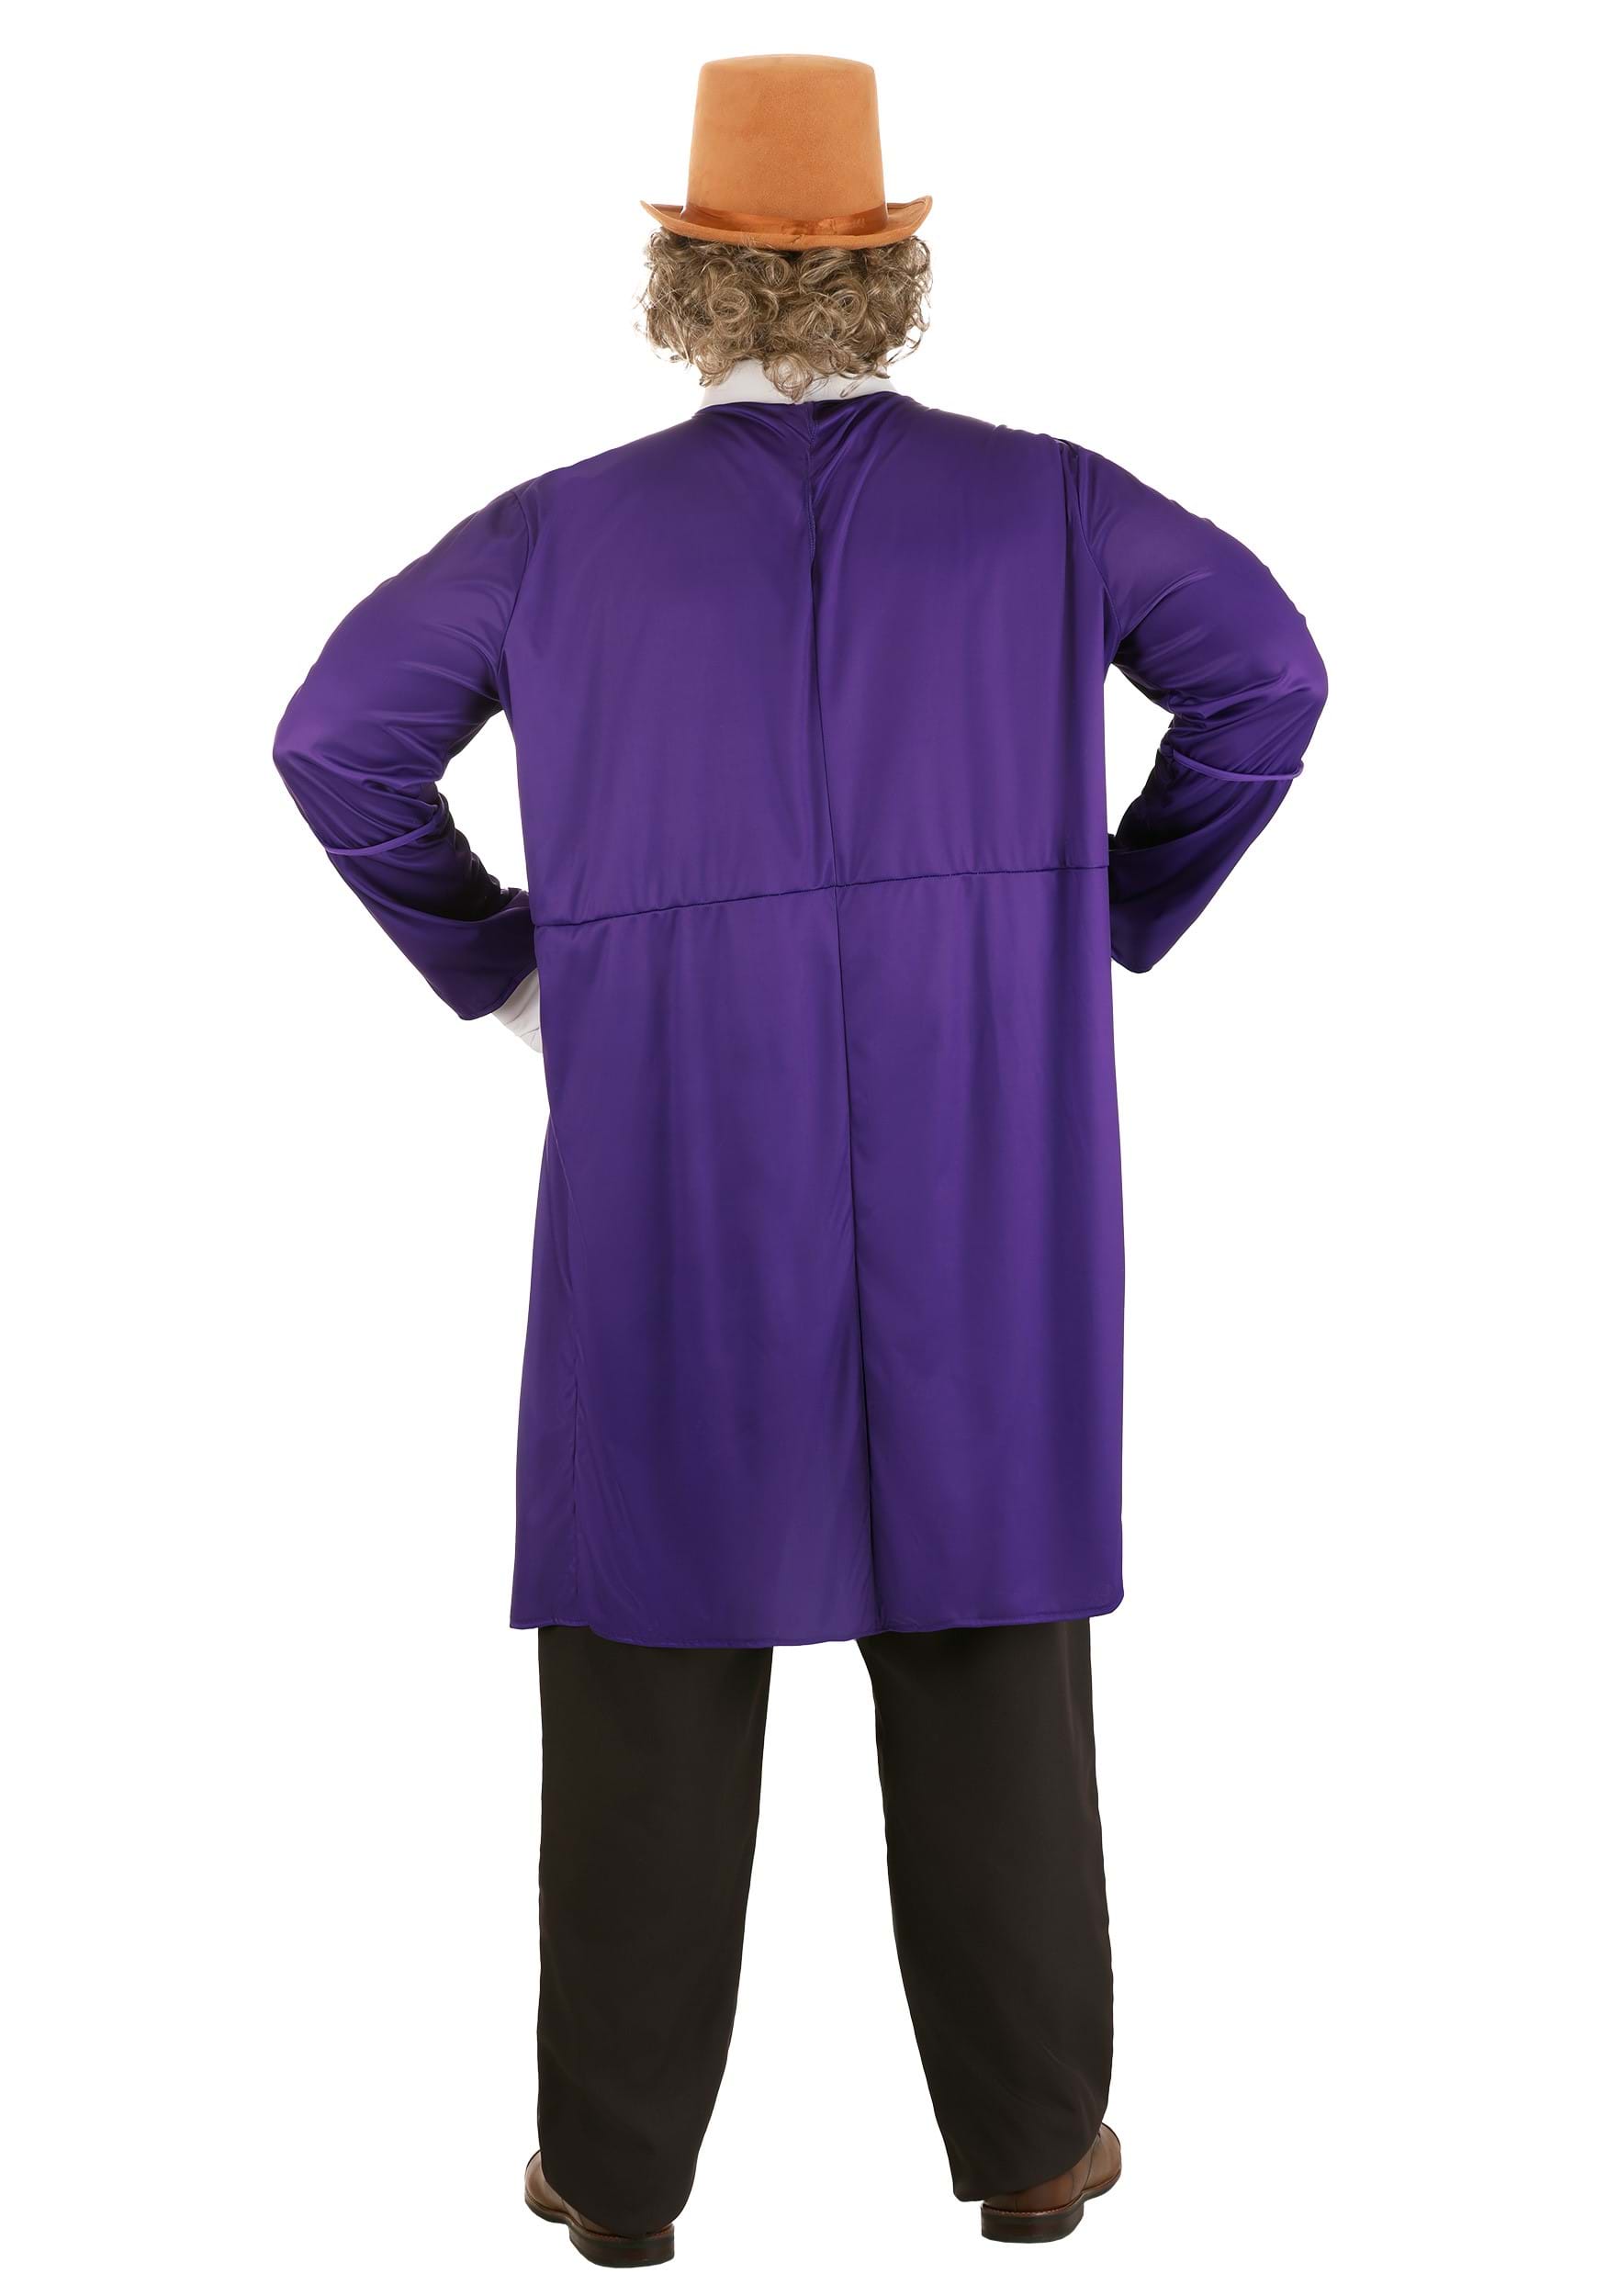 Men's Plus Size Willy Wonka Men's Costume